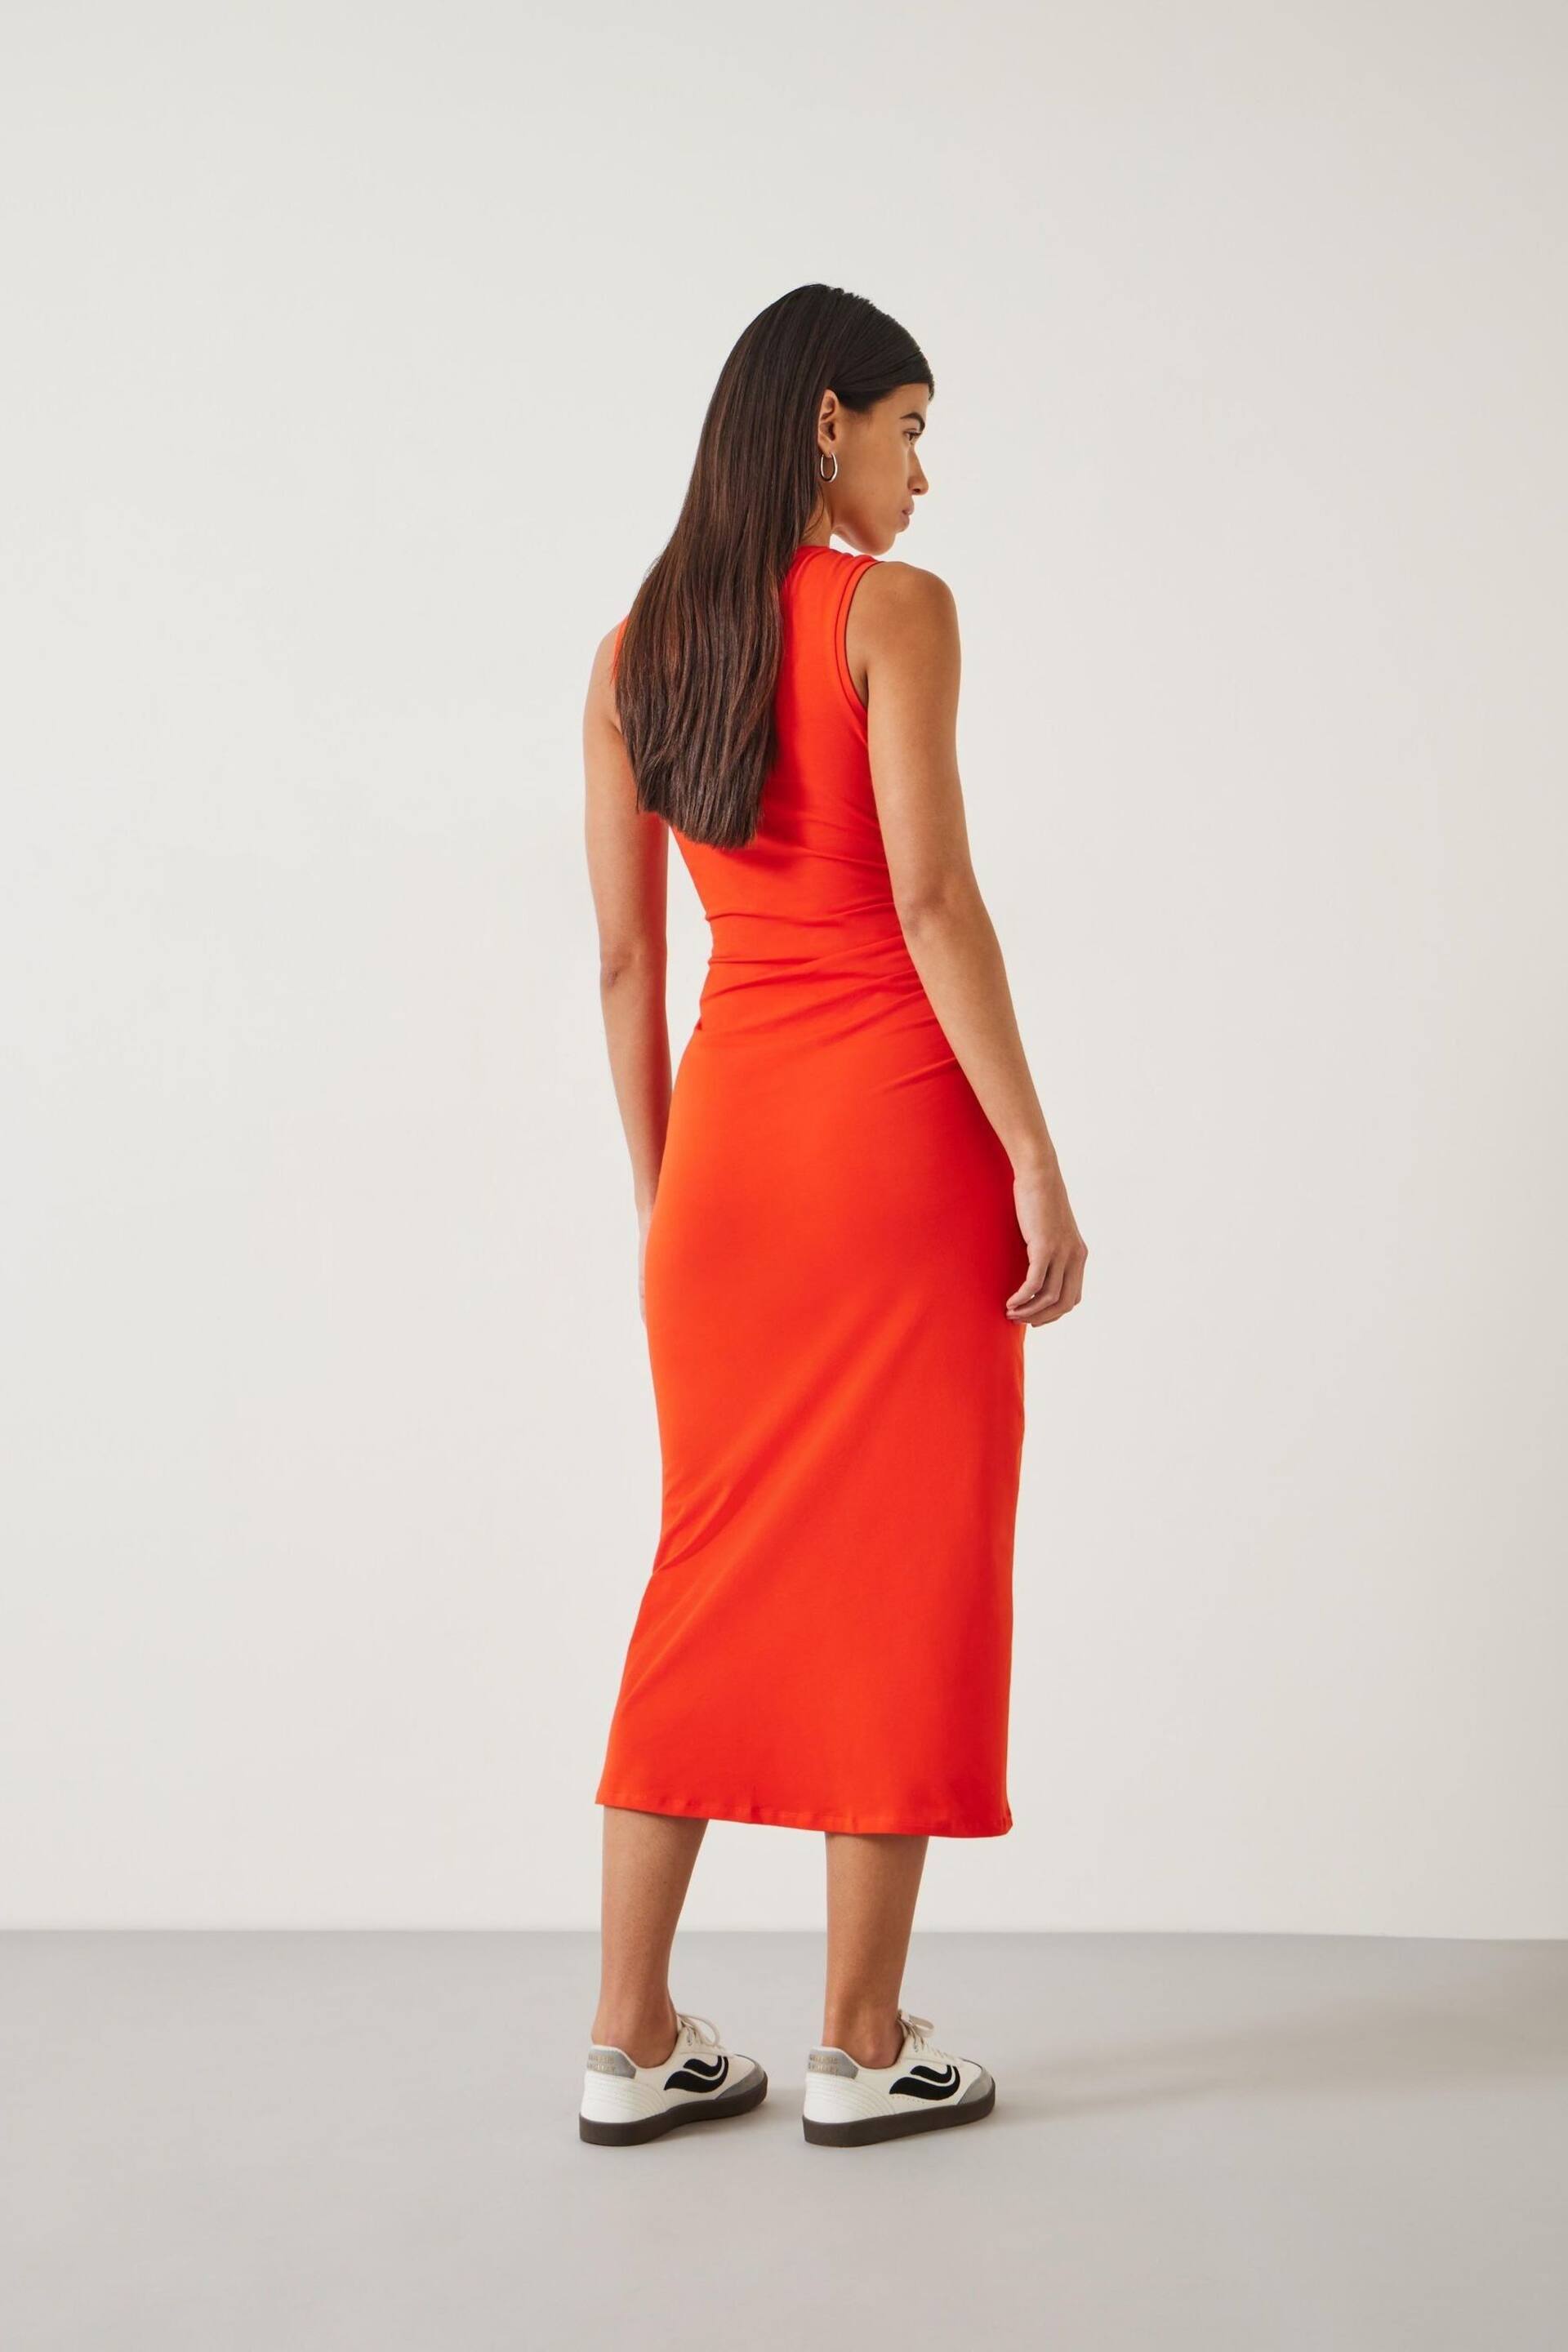 Hush Orange Sleeveless Judy Jersey Midi Dress - Image 3 of 4